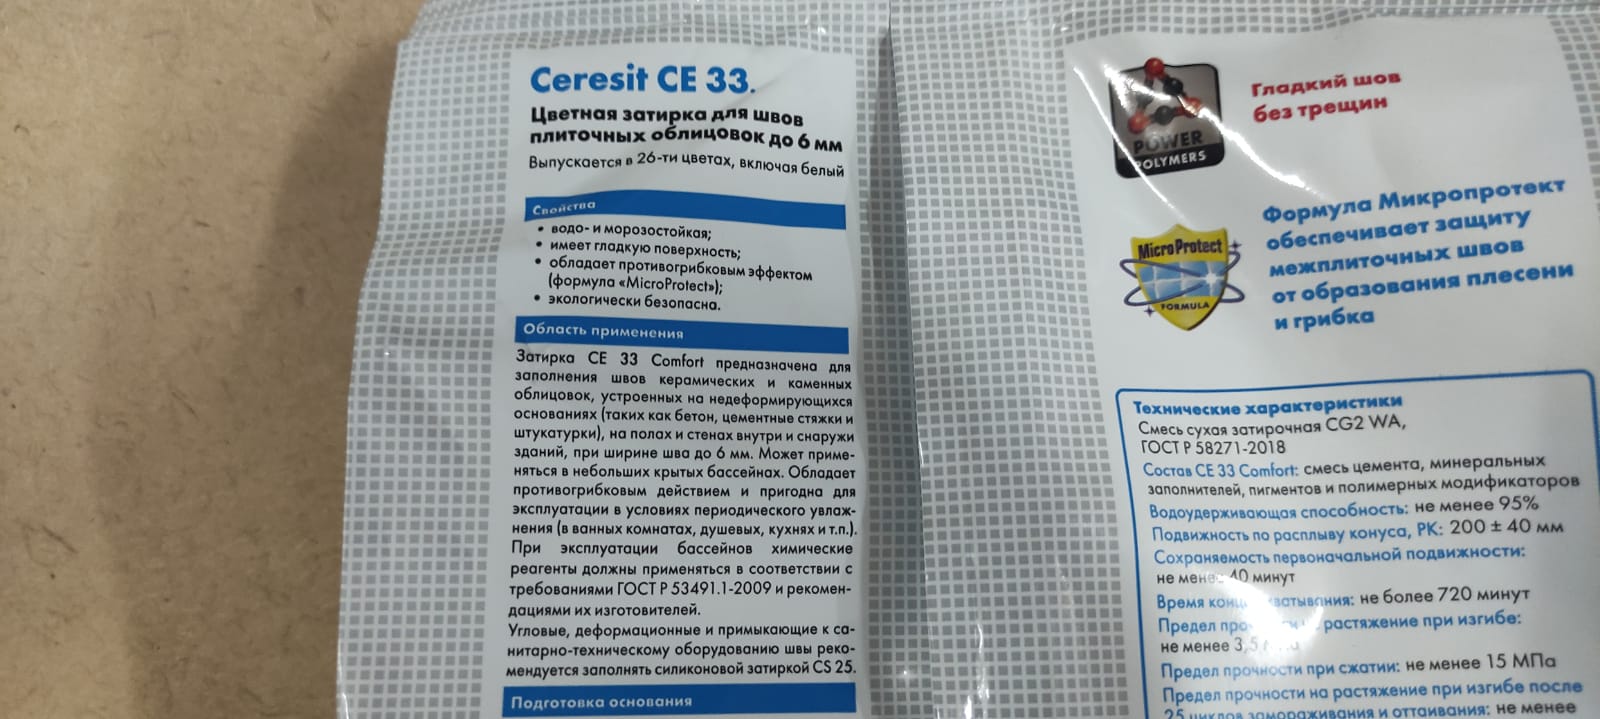 Затирка для швов Ceresit / Церезит CE 33 Comfort 5 кг (цвет: серый)								